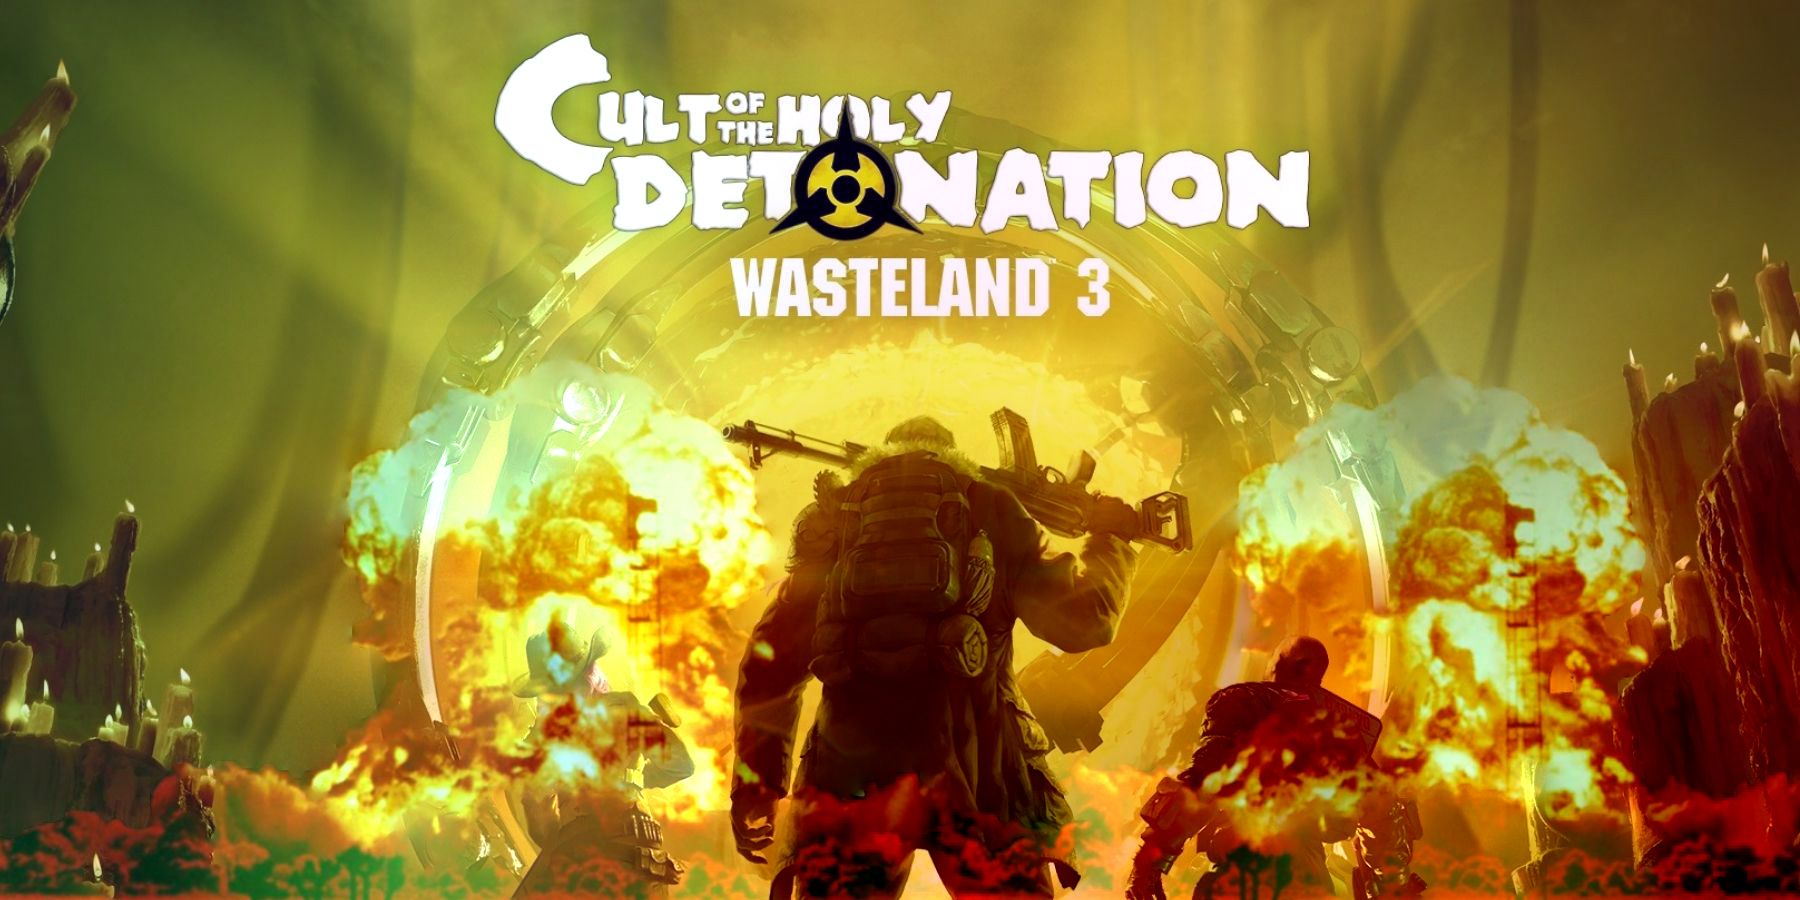 wasteland 3 cult of the holy detonation length